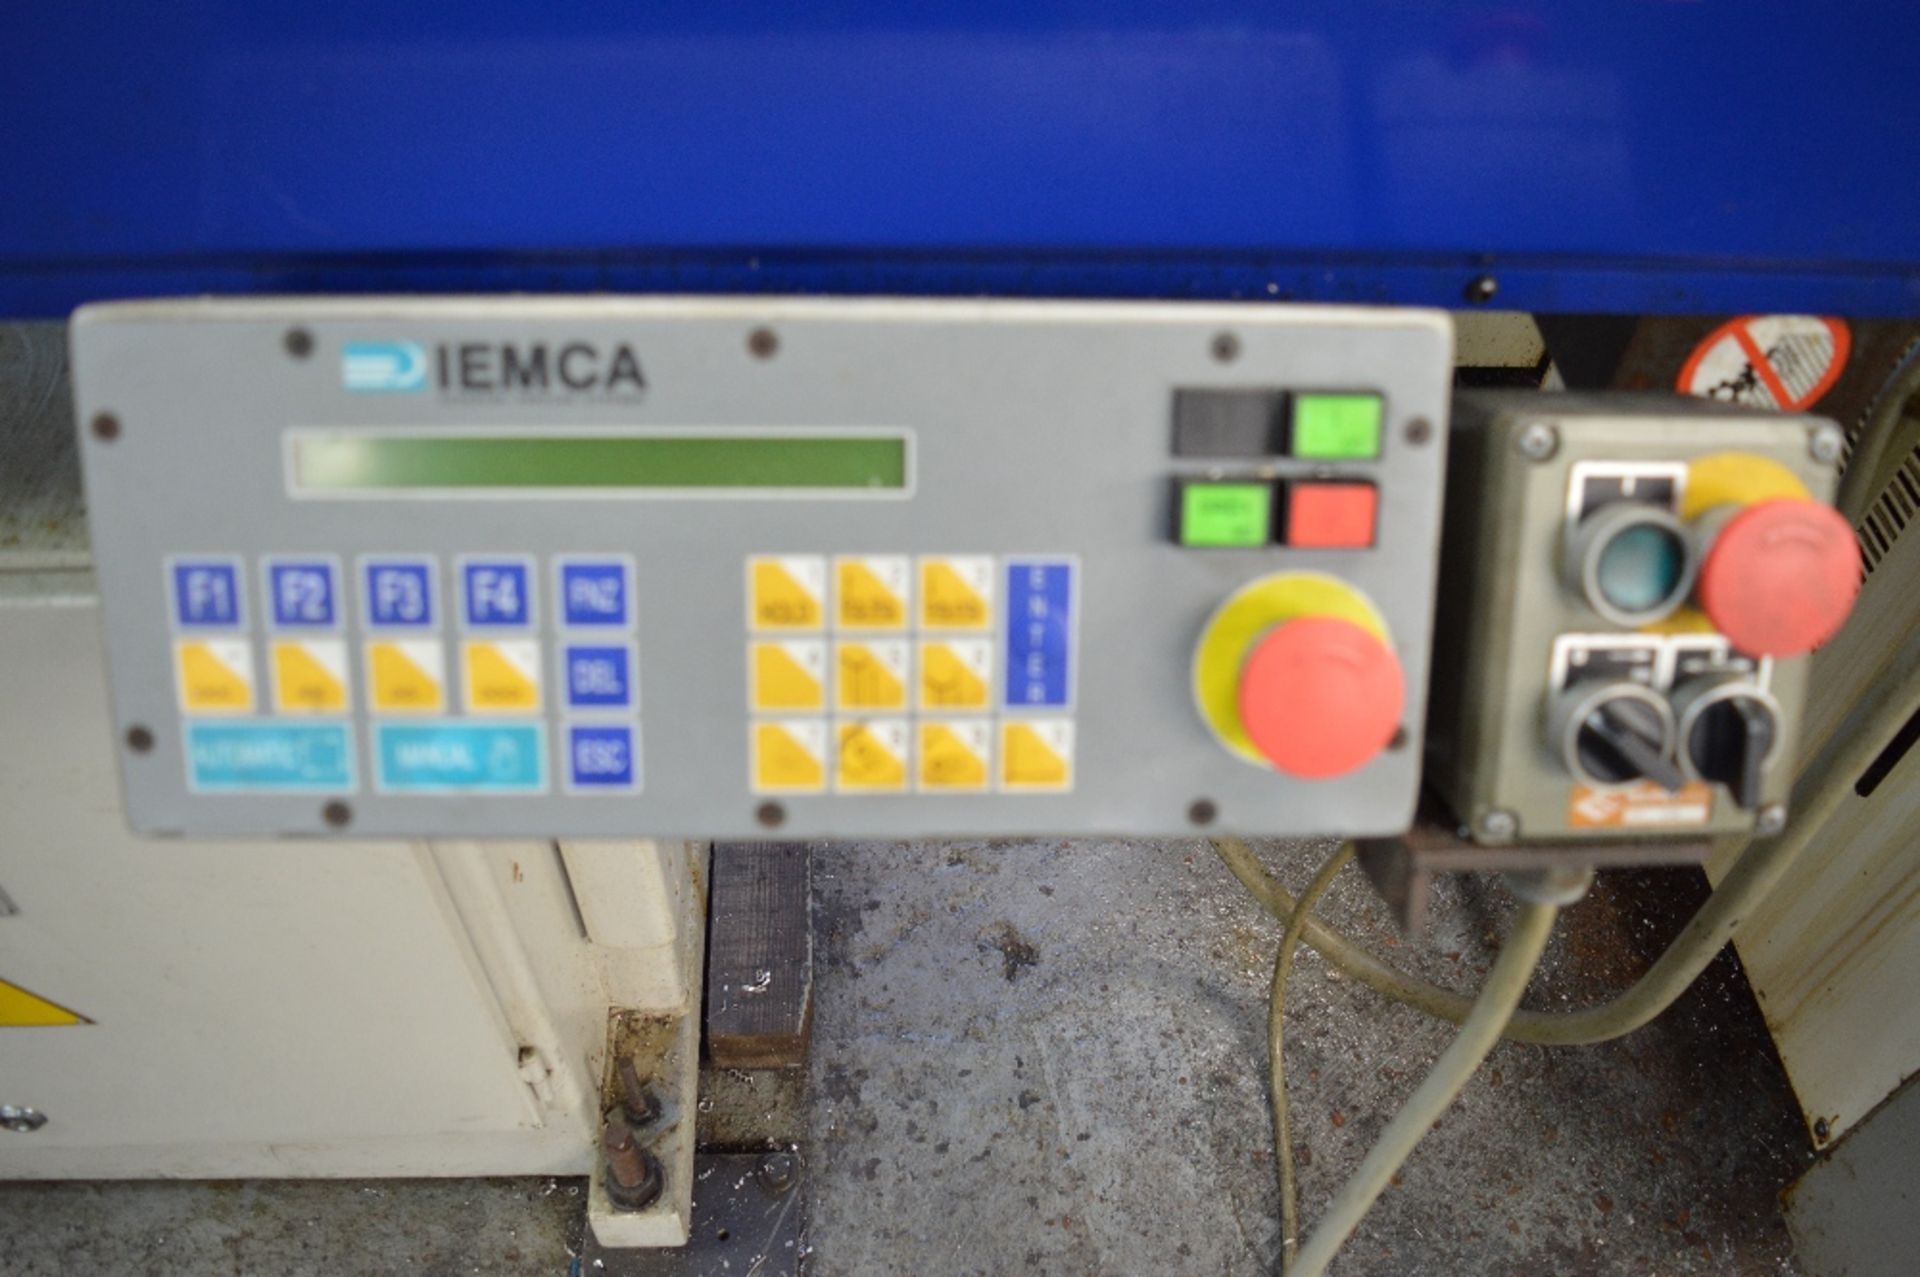 Okuma LB15 II-M CNC lathe
Serial no. 0605.1310
Max - Image 15 of 17